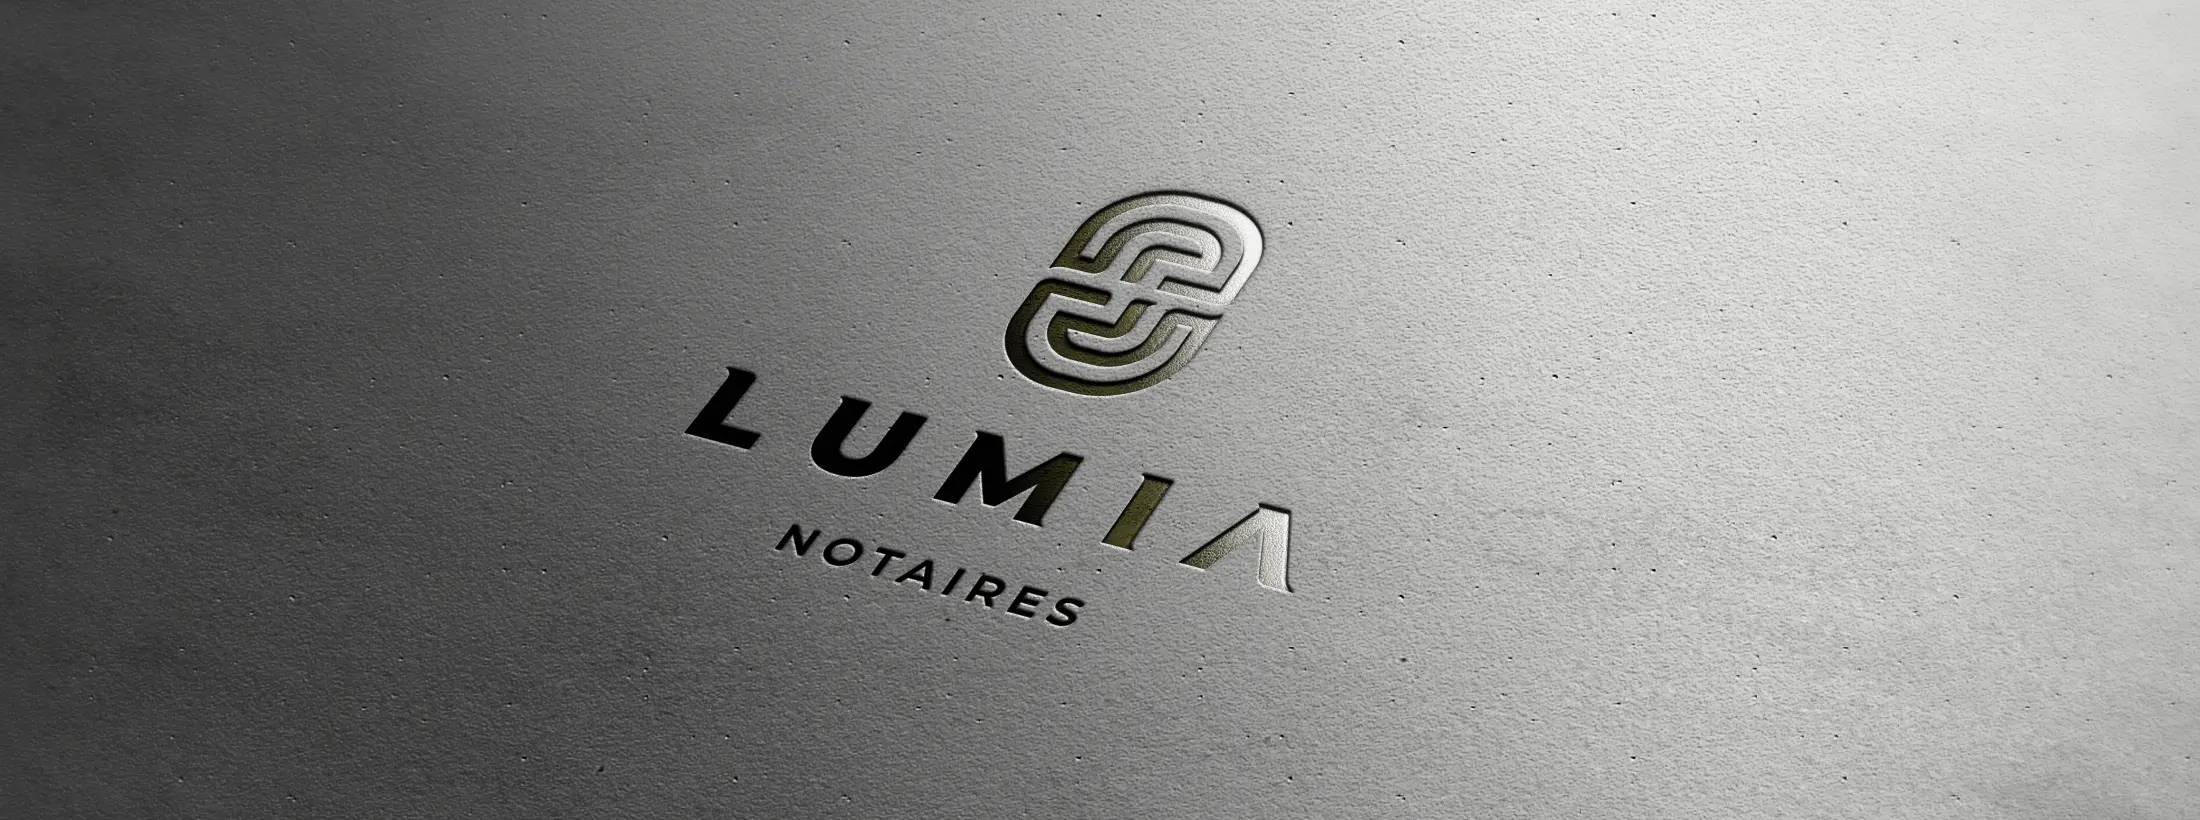 logo lumia branding design phone identite visuelle osb communication